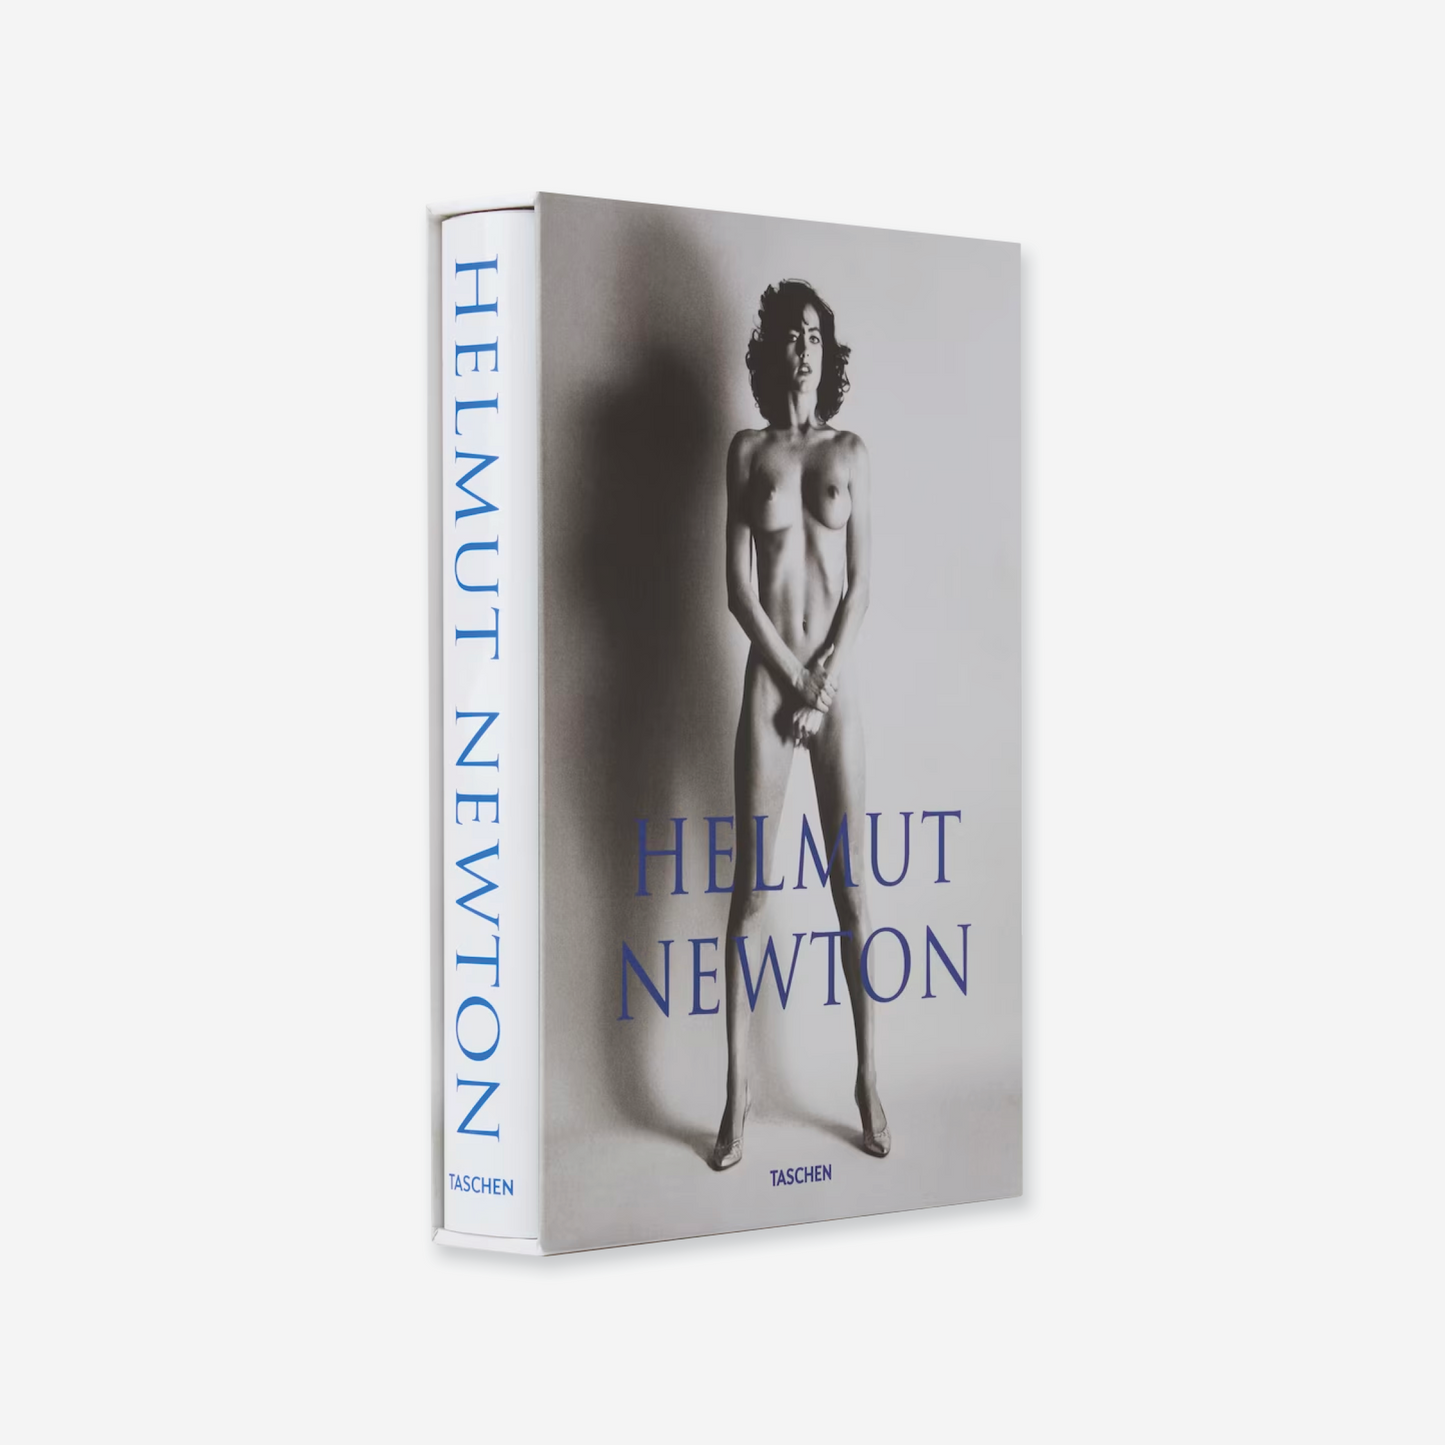 Helmut Newton. SUMO. 20th Anniversary